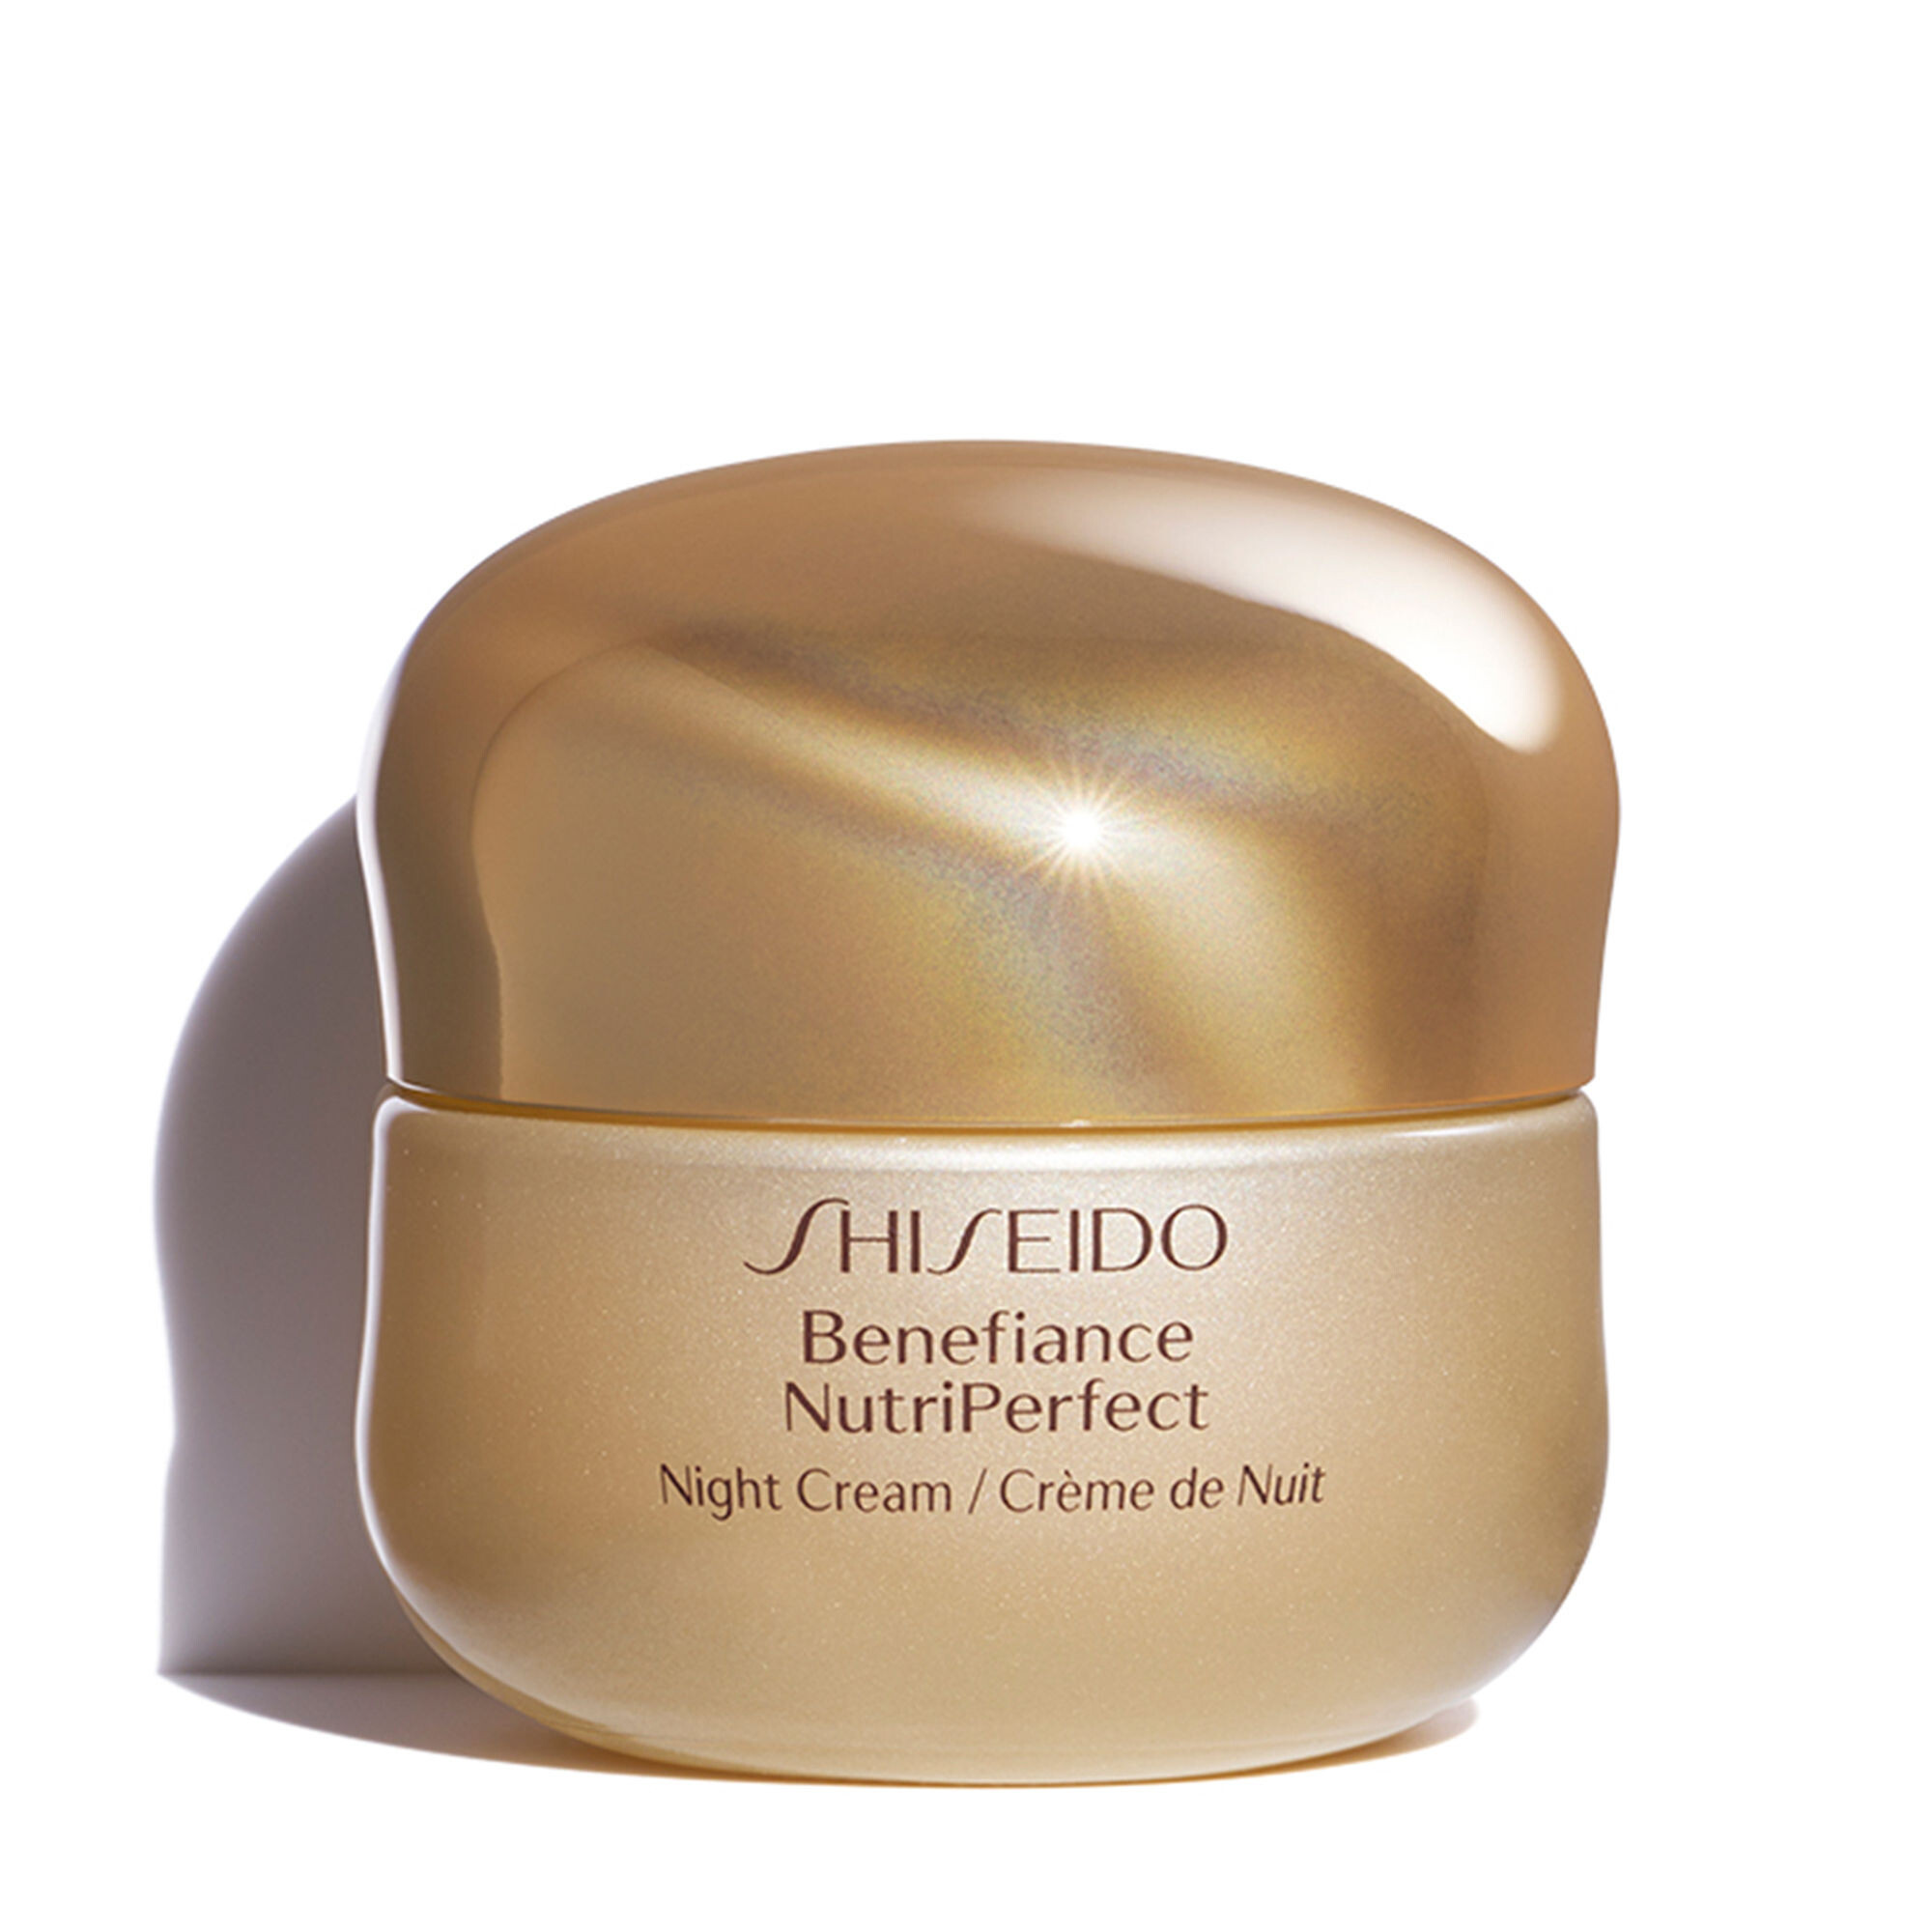 Nachtcreme Shiseido Benefiance NutriPerfect Night Cream 50ml bestellen